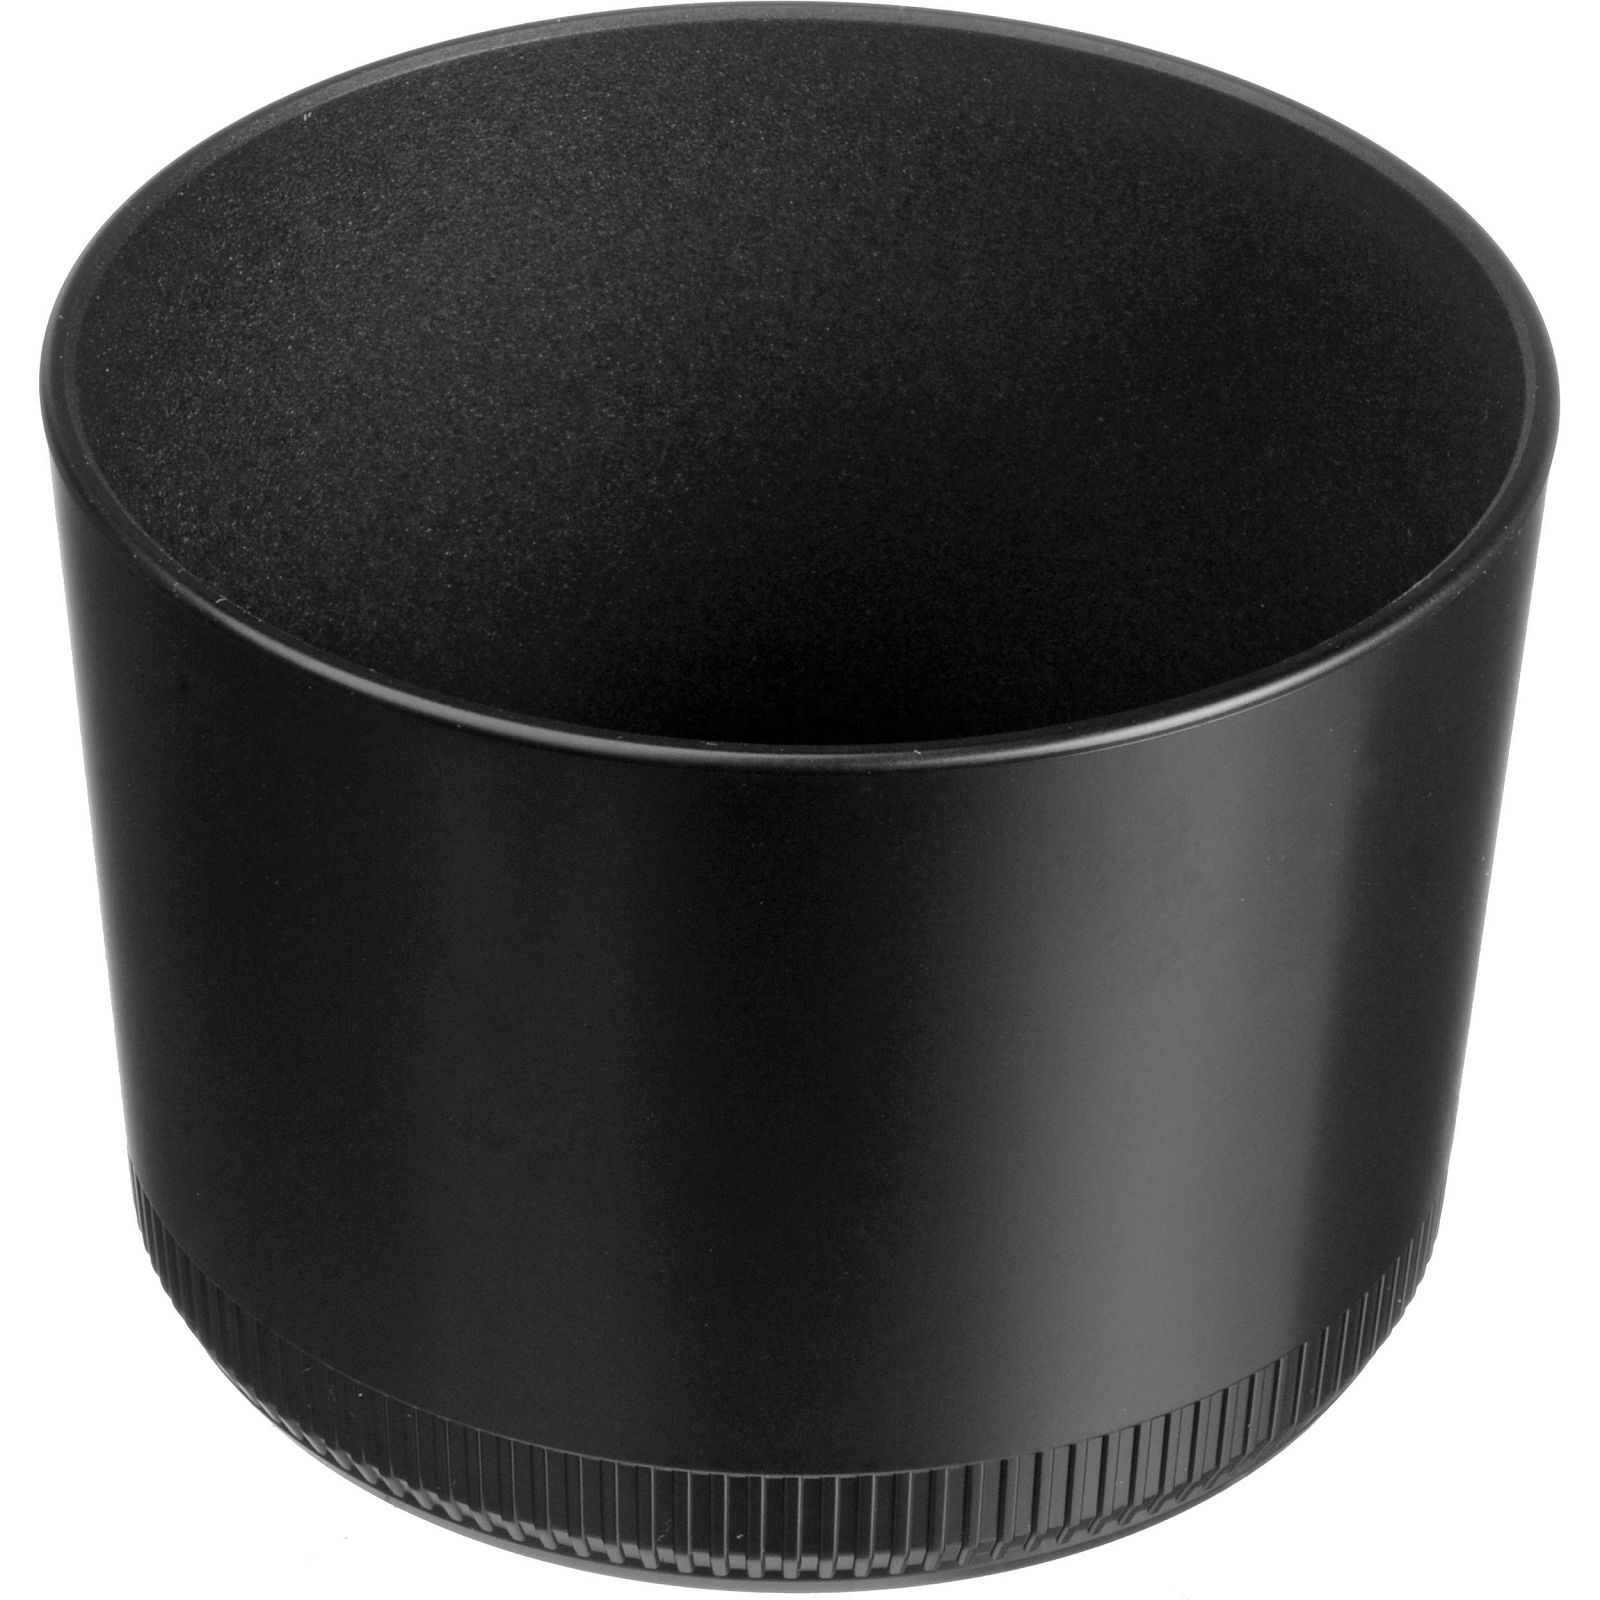 Sigma 70-300mm f/4-5.6 DG Macro telefoto objektiv za Sony A-mount 70-300 F4-5.6 F/4,0-5,6 70-300/4-5,6